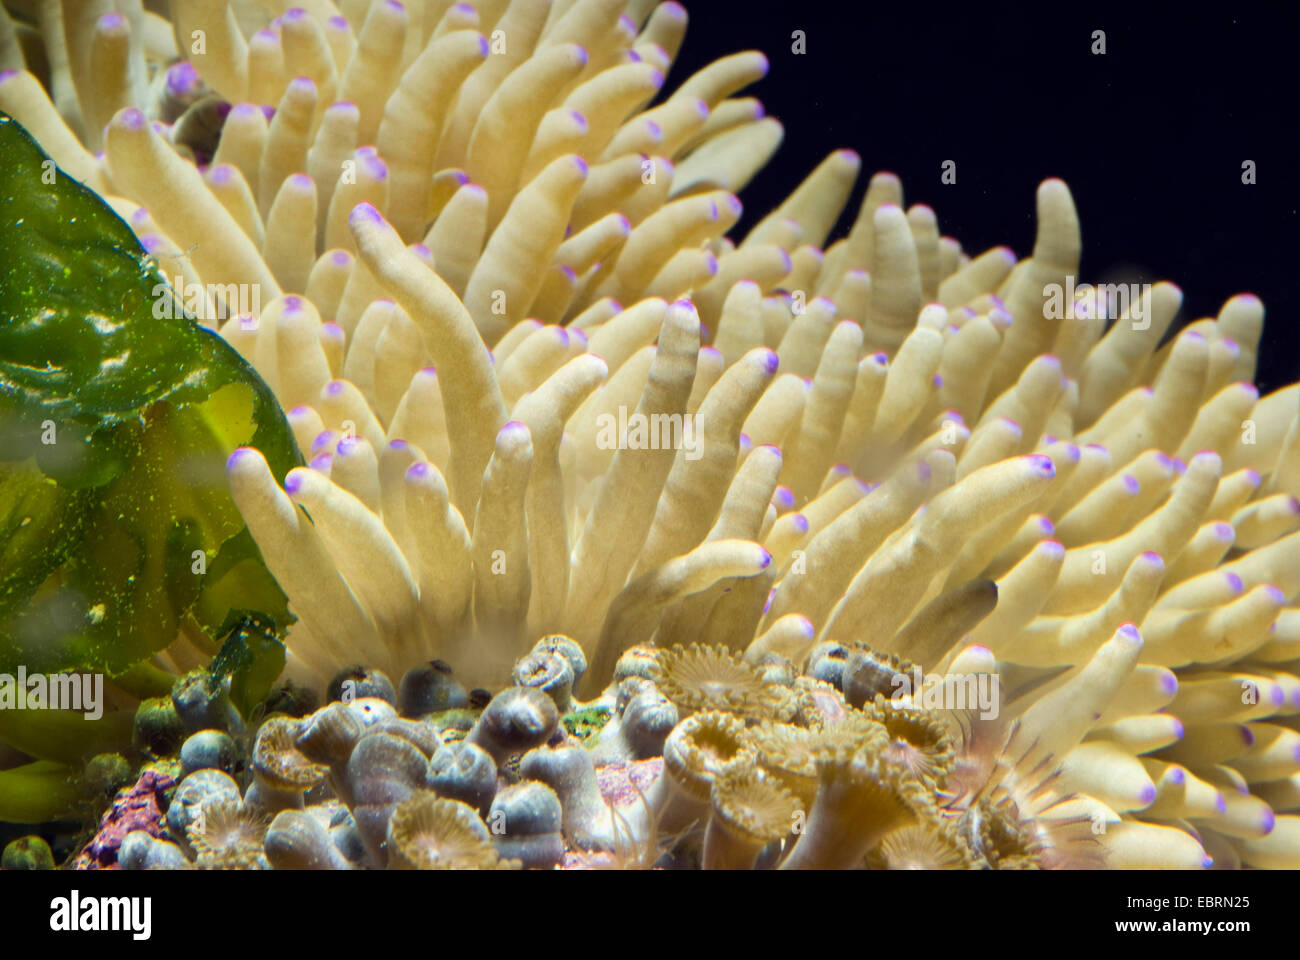 Leather anemone, Leathery sea anemone (Heteractis crispa), detail of a leathery sea anemone Stock Photo